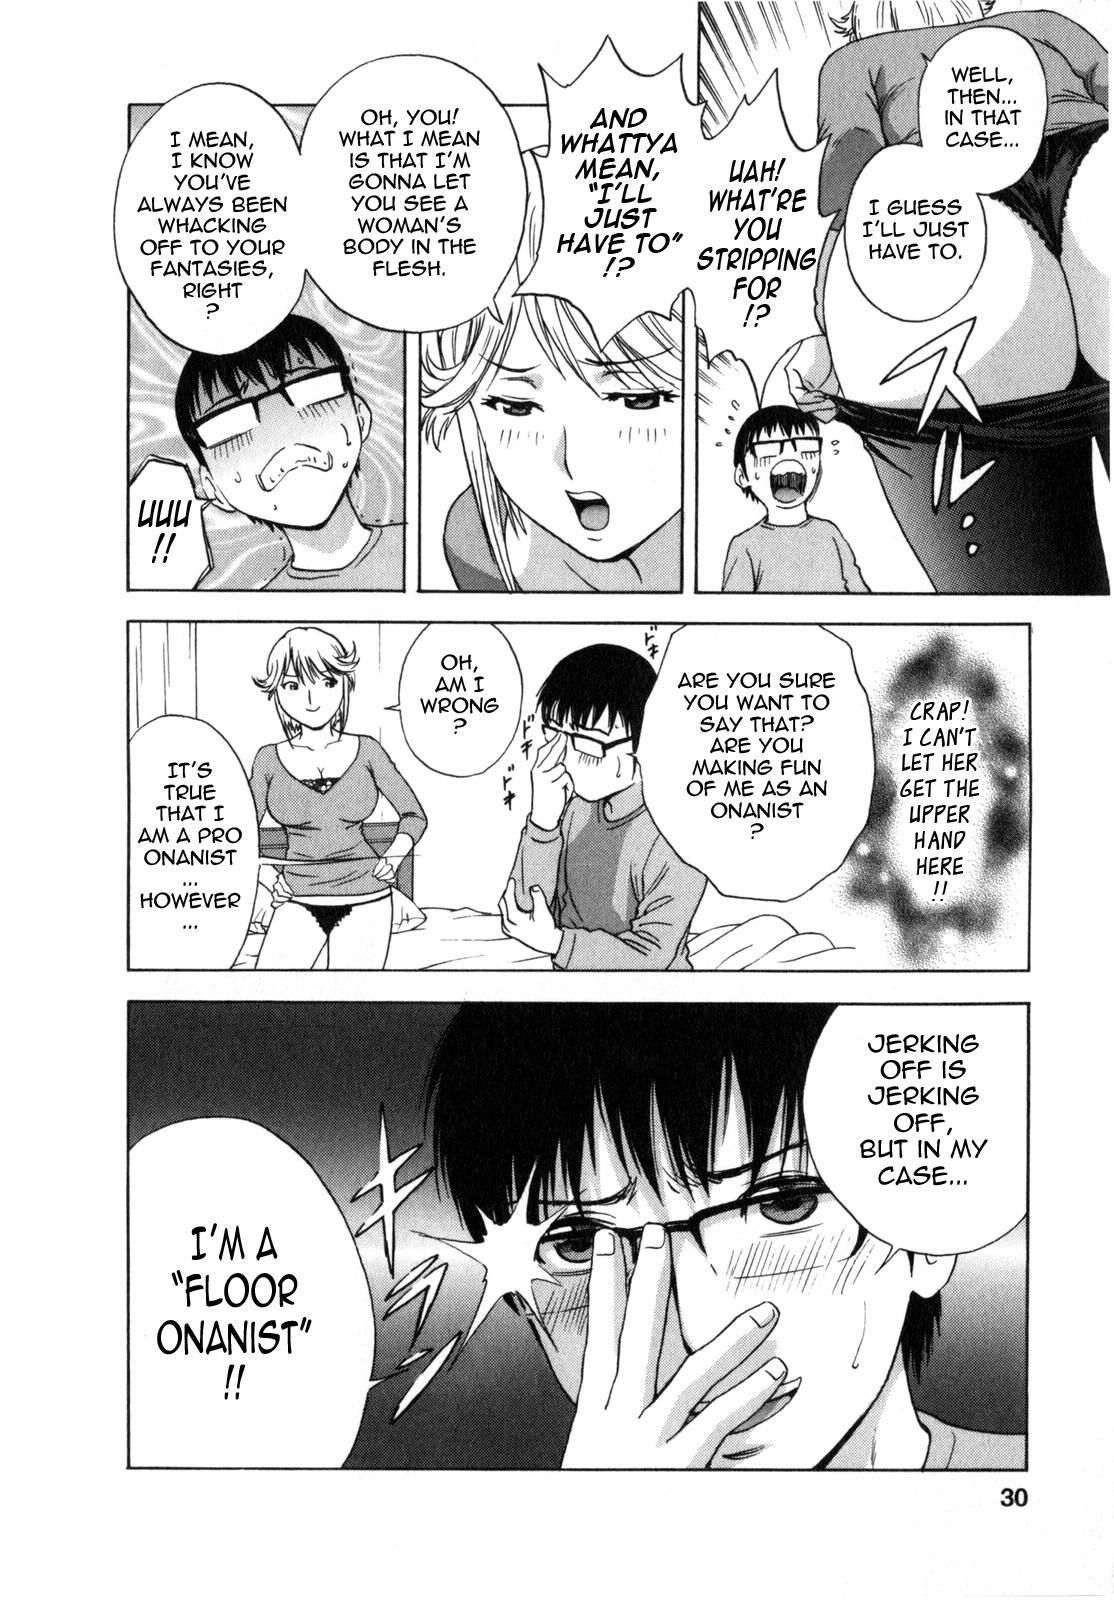 [Hidemaru] Life with Married Women Just Like a Manga 1 - Ch. 1-4 [English] {Tadanohito} 31